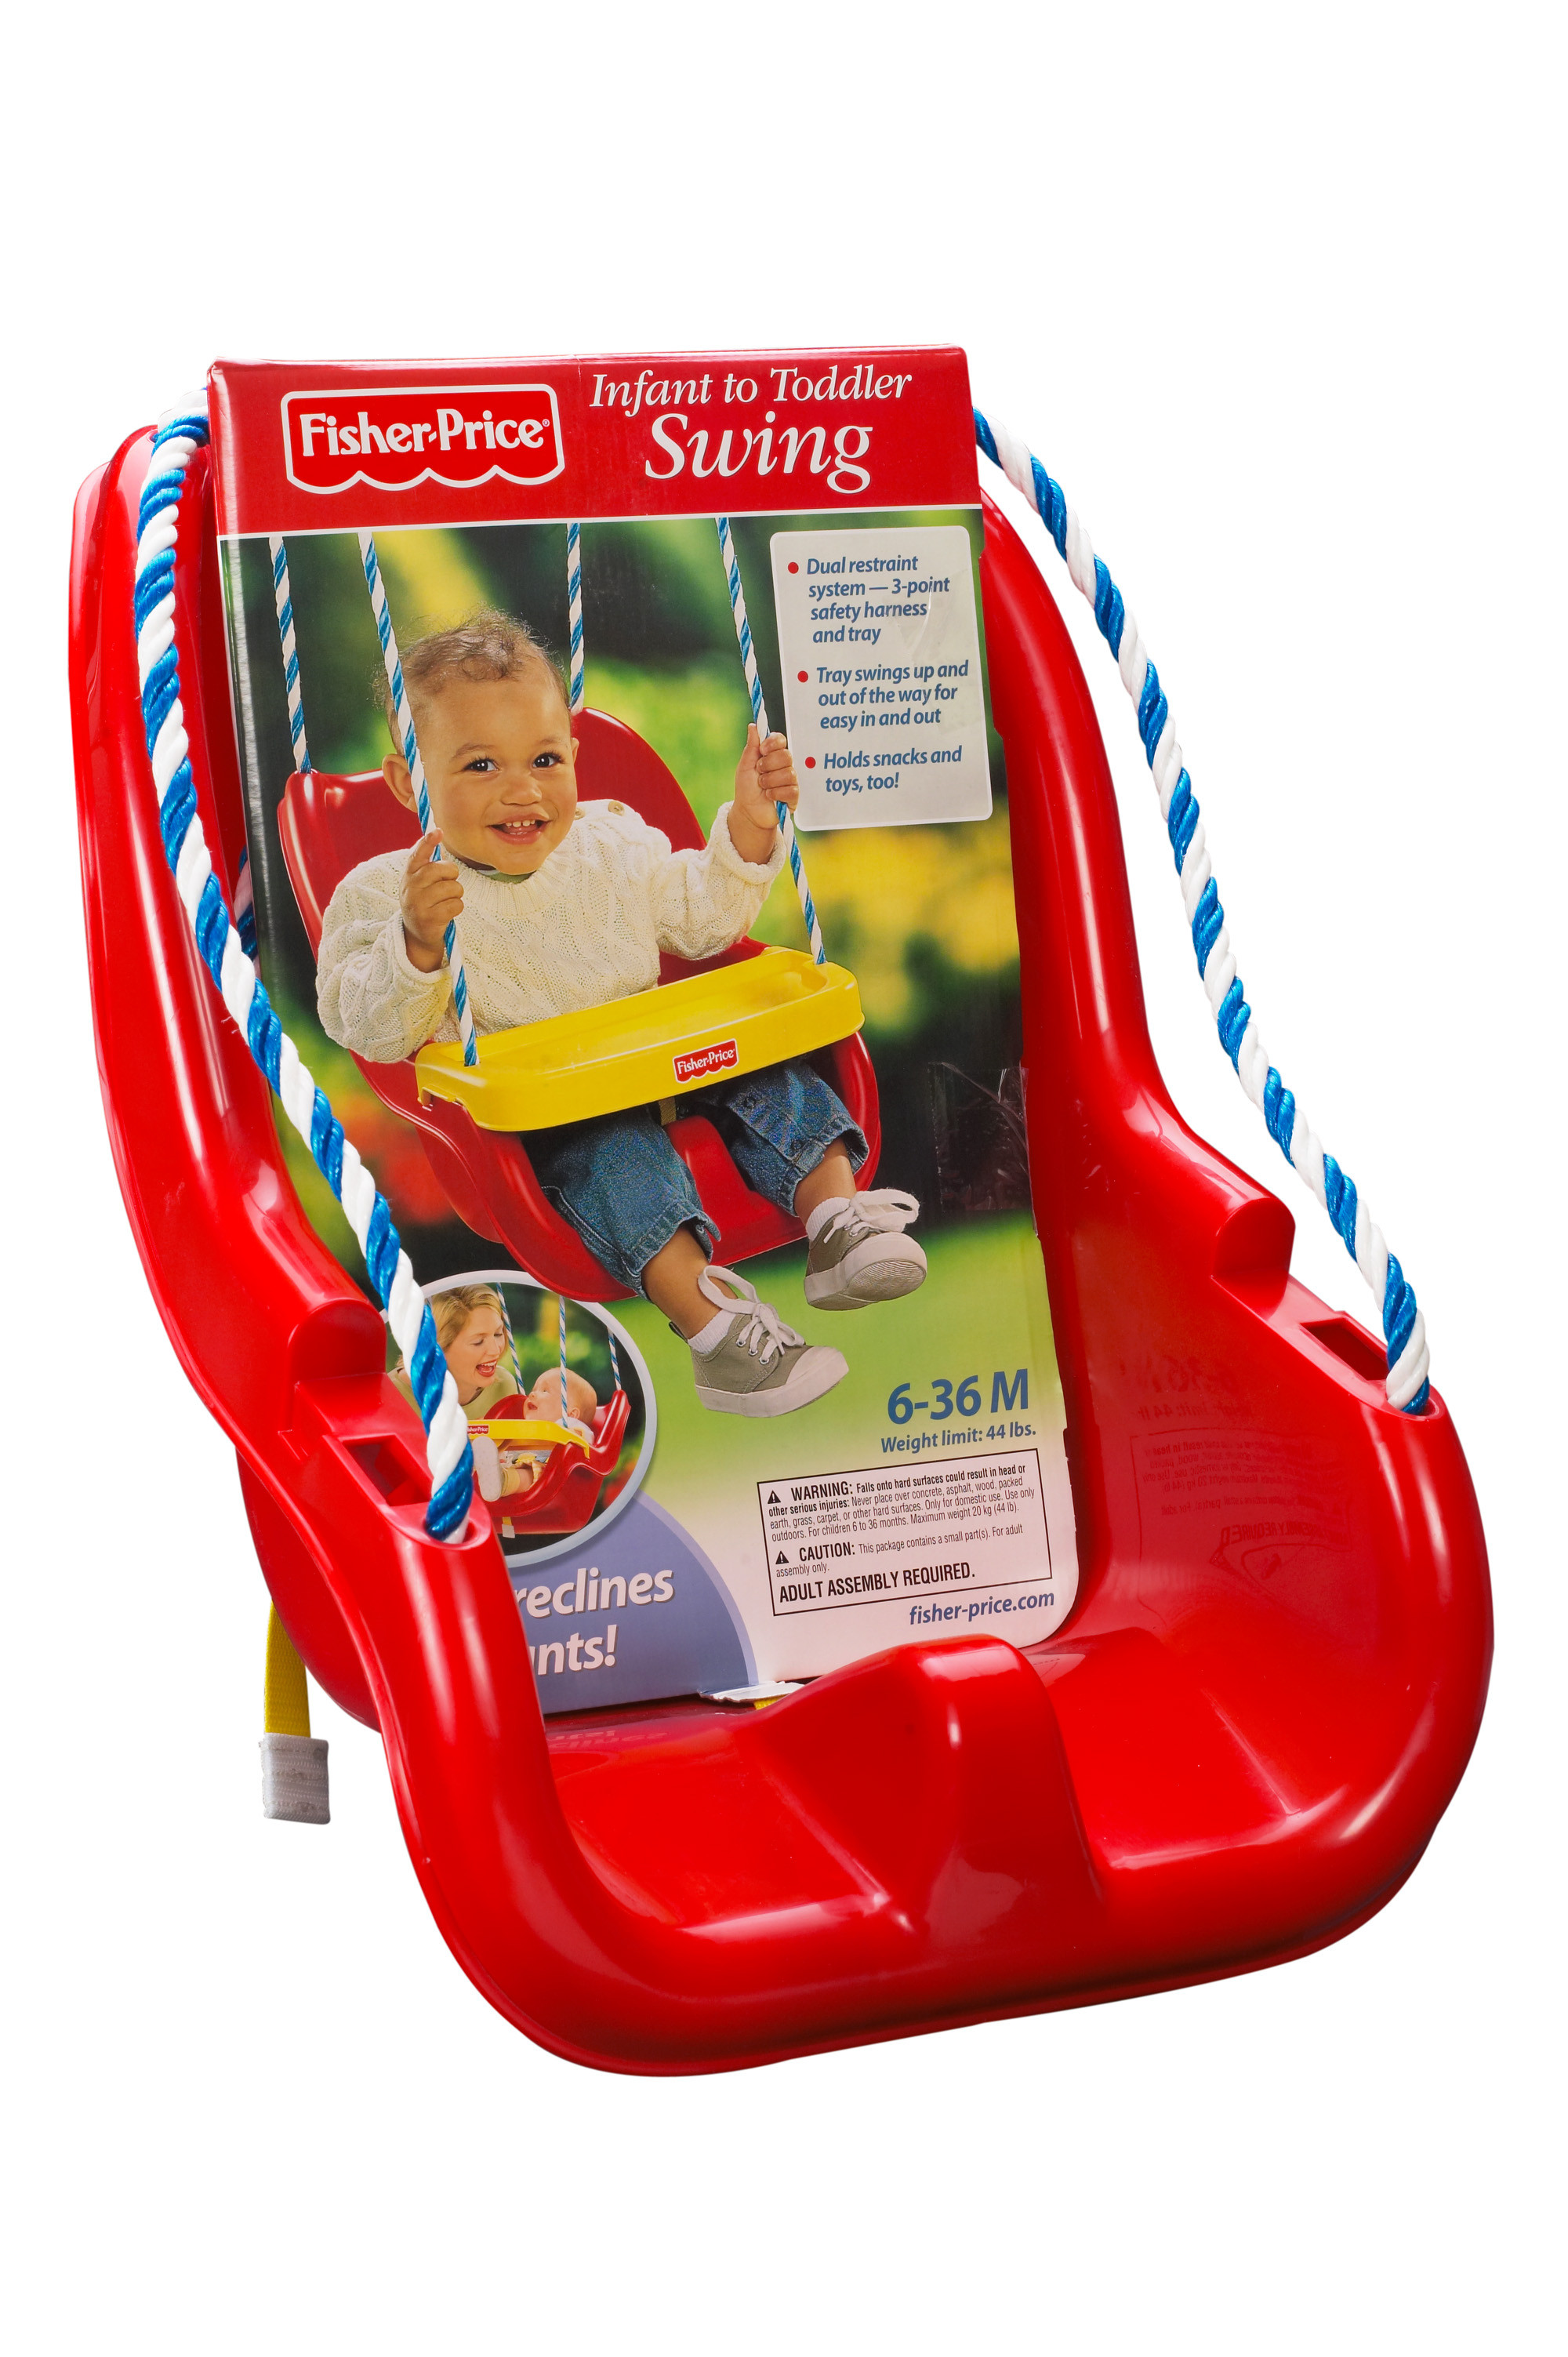 Best ideas about Baby Swing Set Walmart
. Save or Pin AGPtek Children s Web Swing Playground Platform net Swing Now.